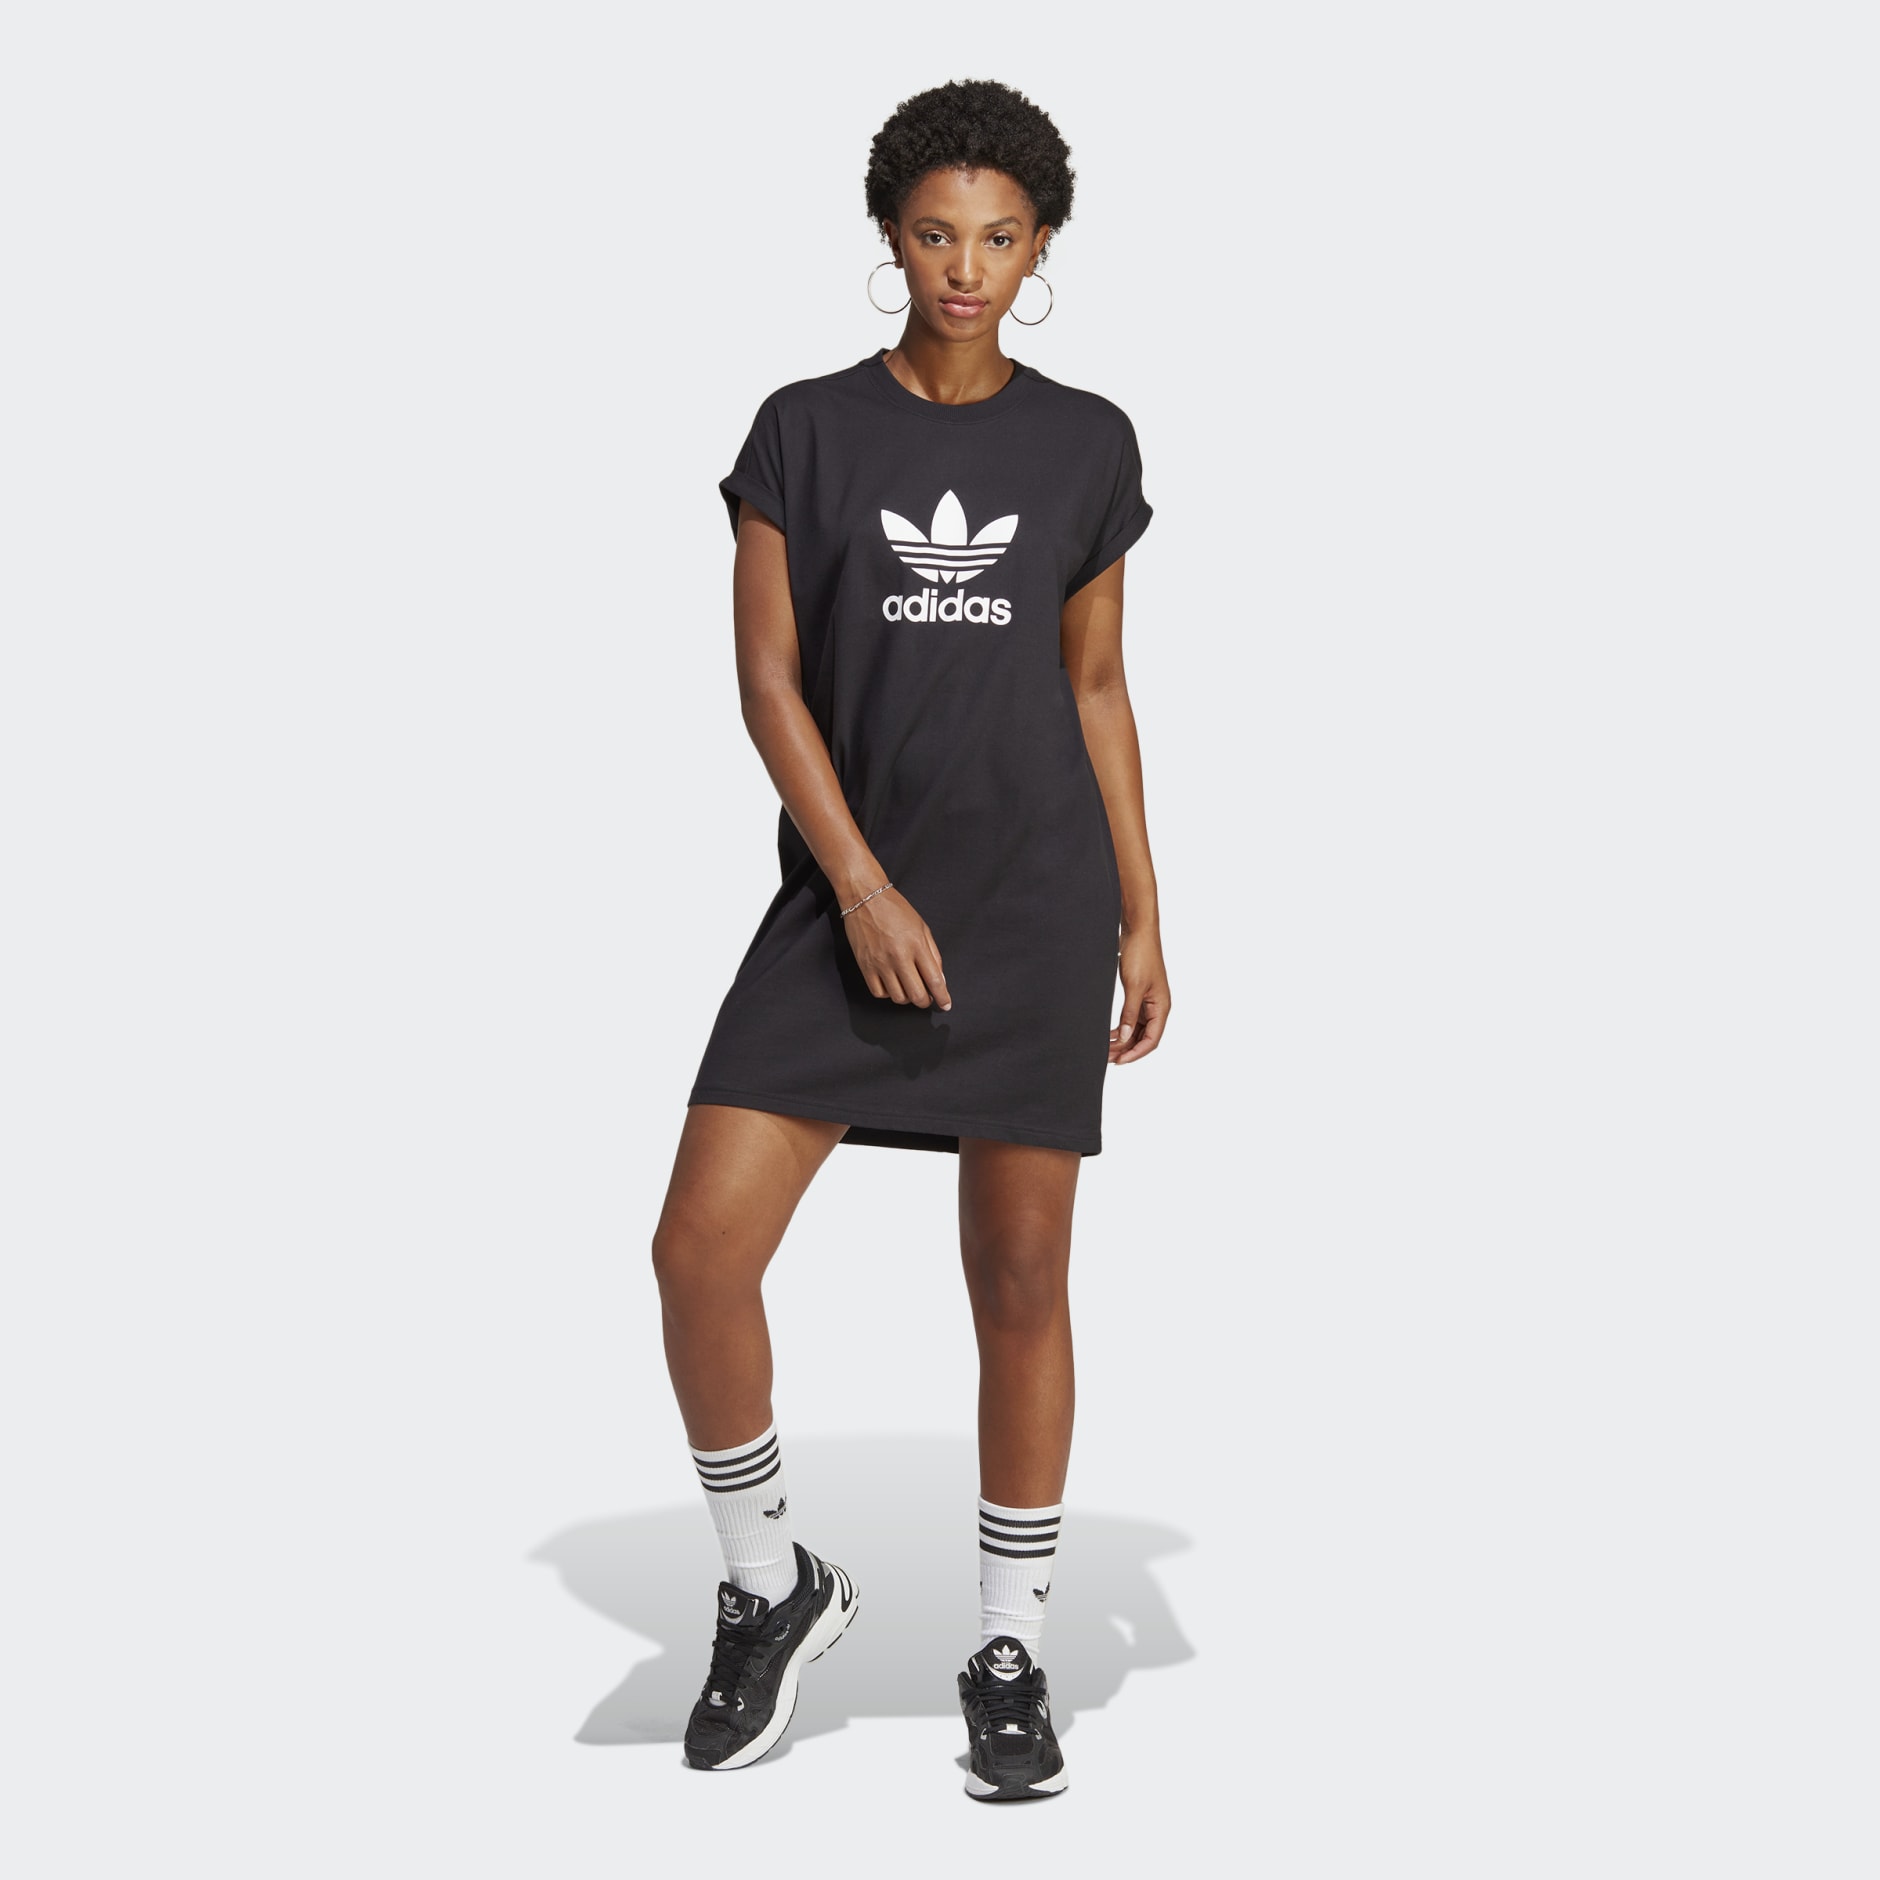 Women\'s Clothing - Adicolor Dress Black adidas Trefoil - Classics Tee Oman 